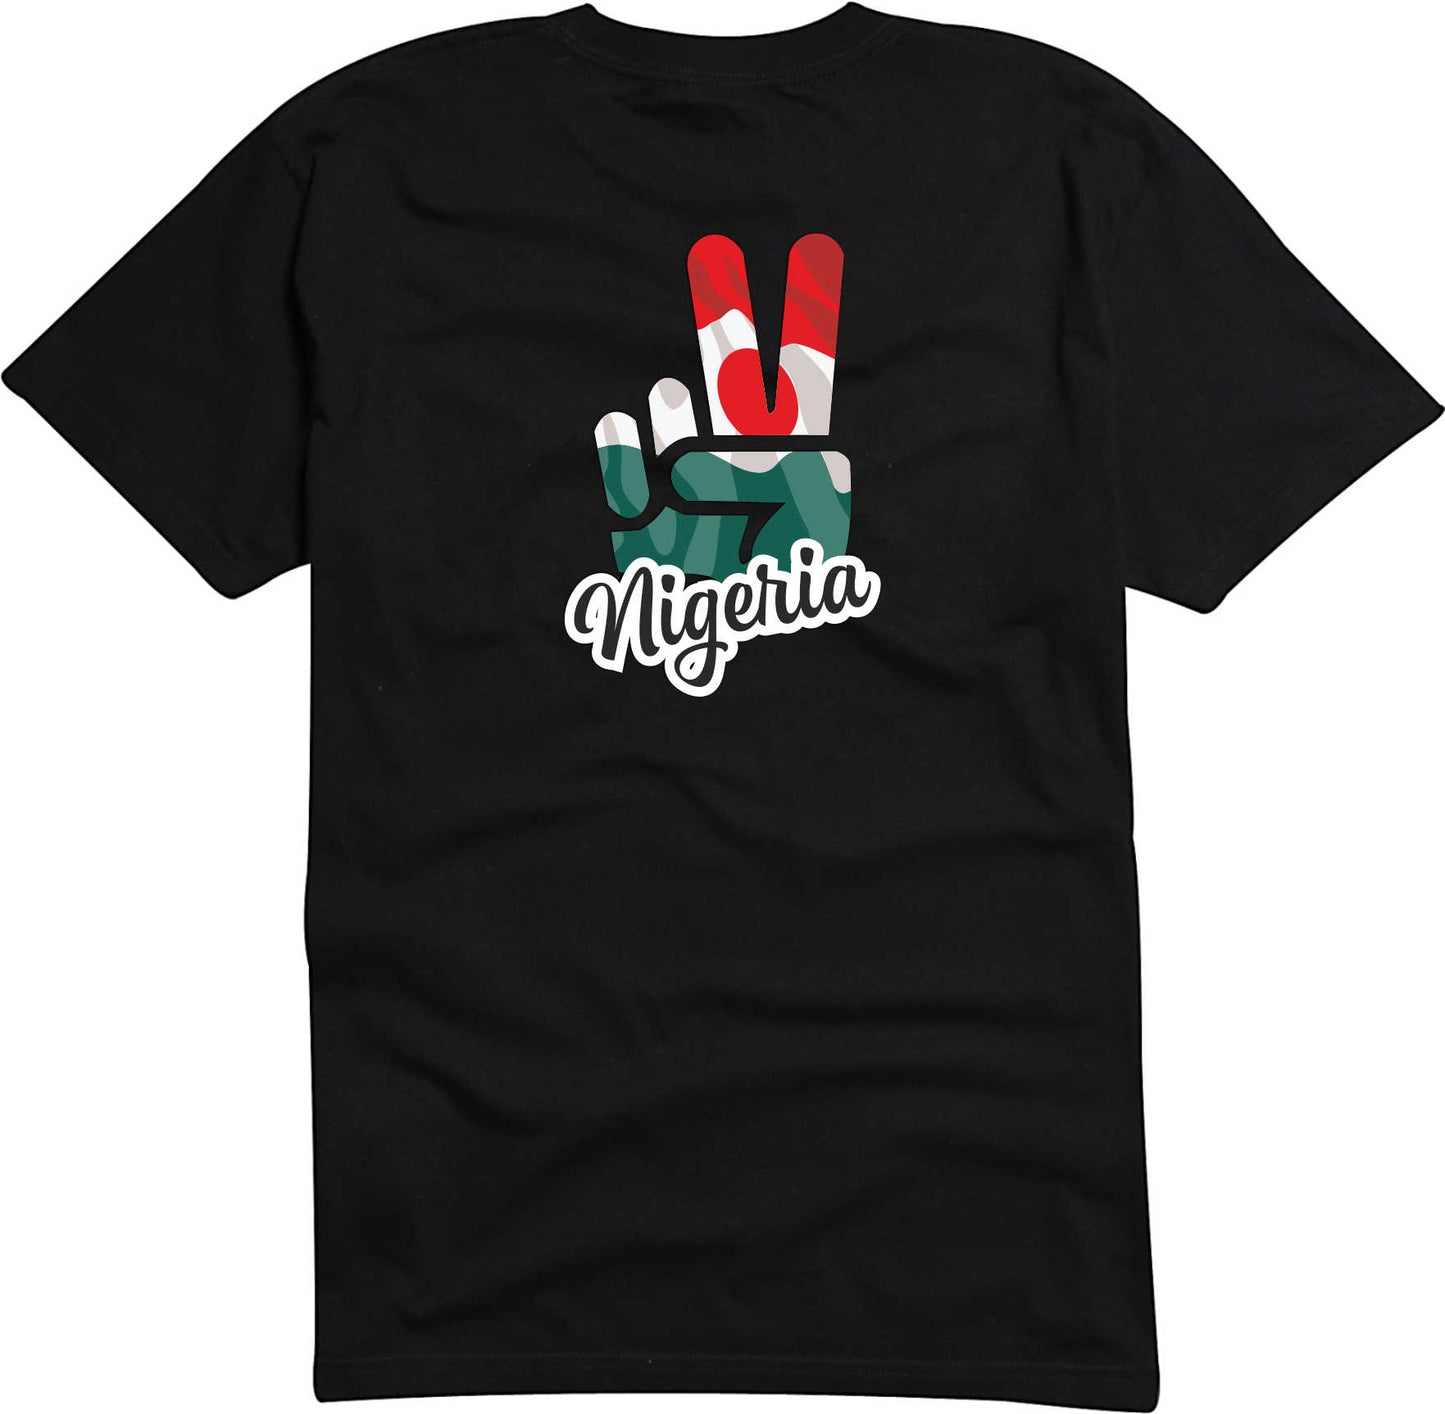 T-Shirt Herren - Victory - Flagge / Fahne - Nigeria - Sieg